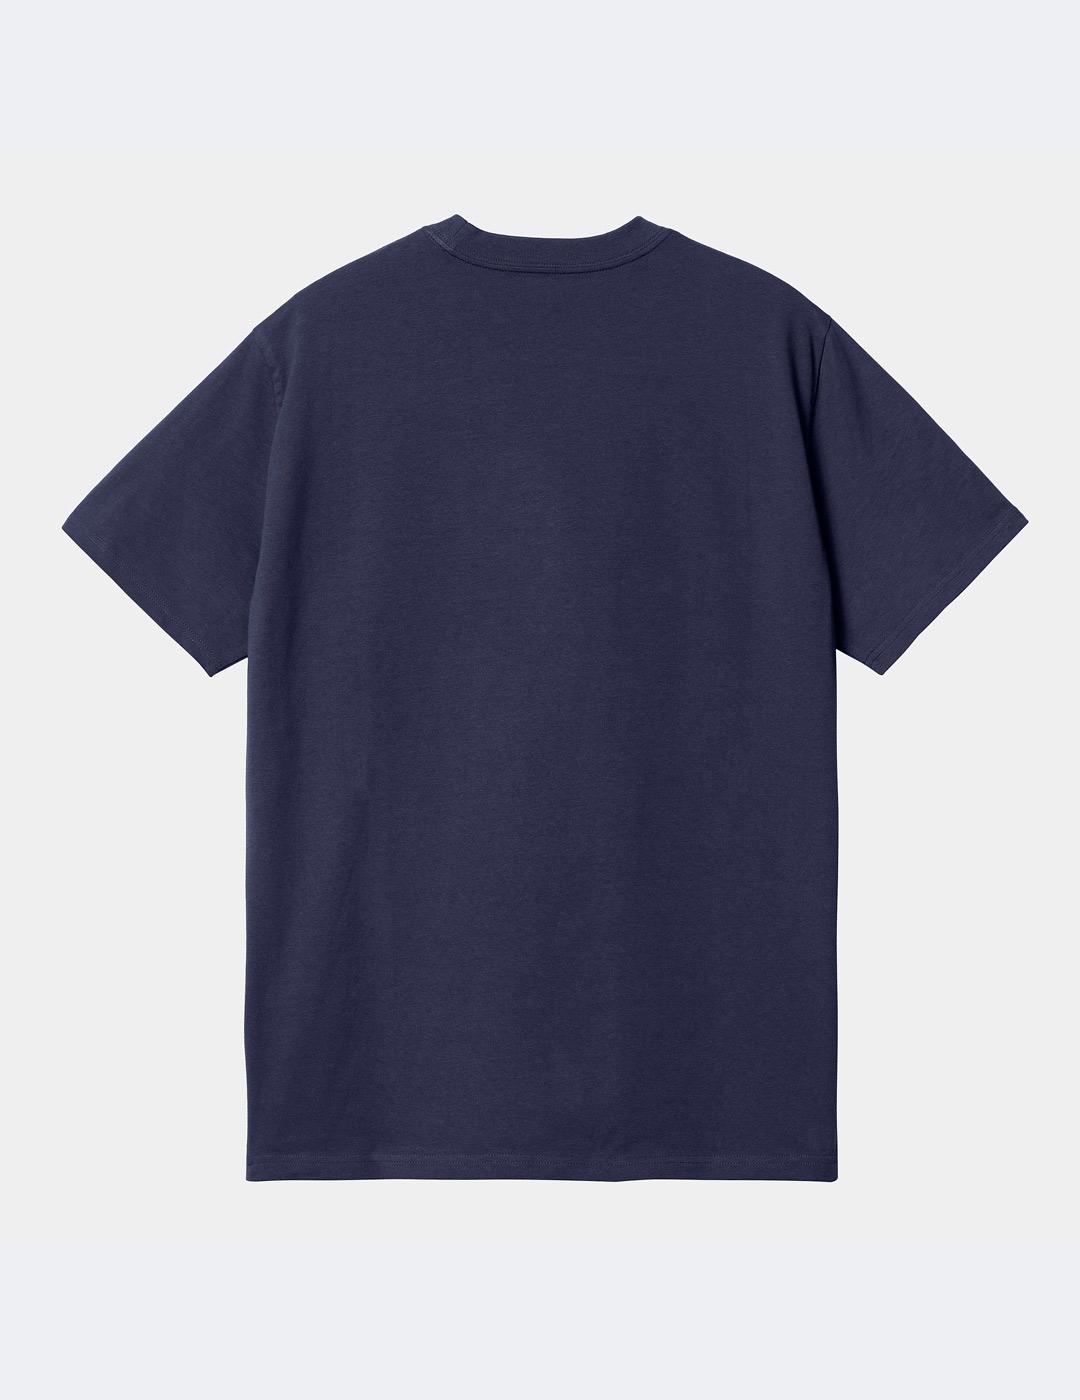 Camiseta CARHARTT SCRIPT - Enzian / Misty Sky